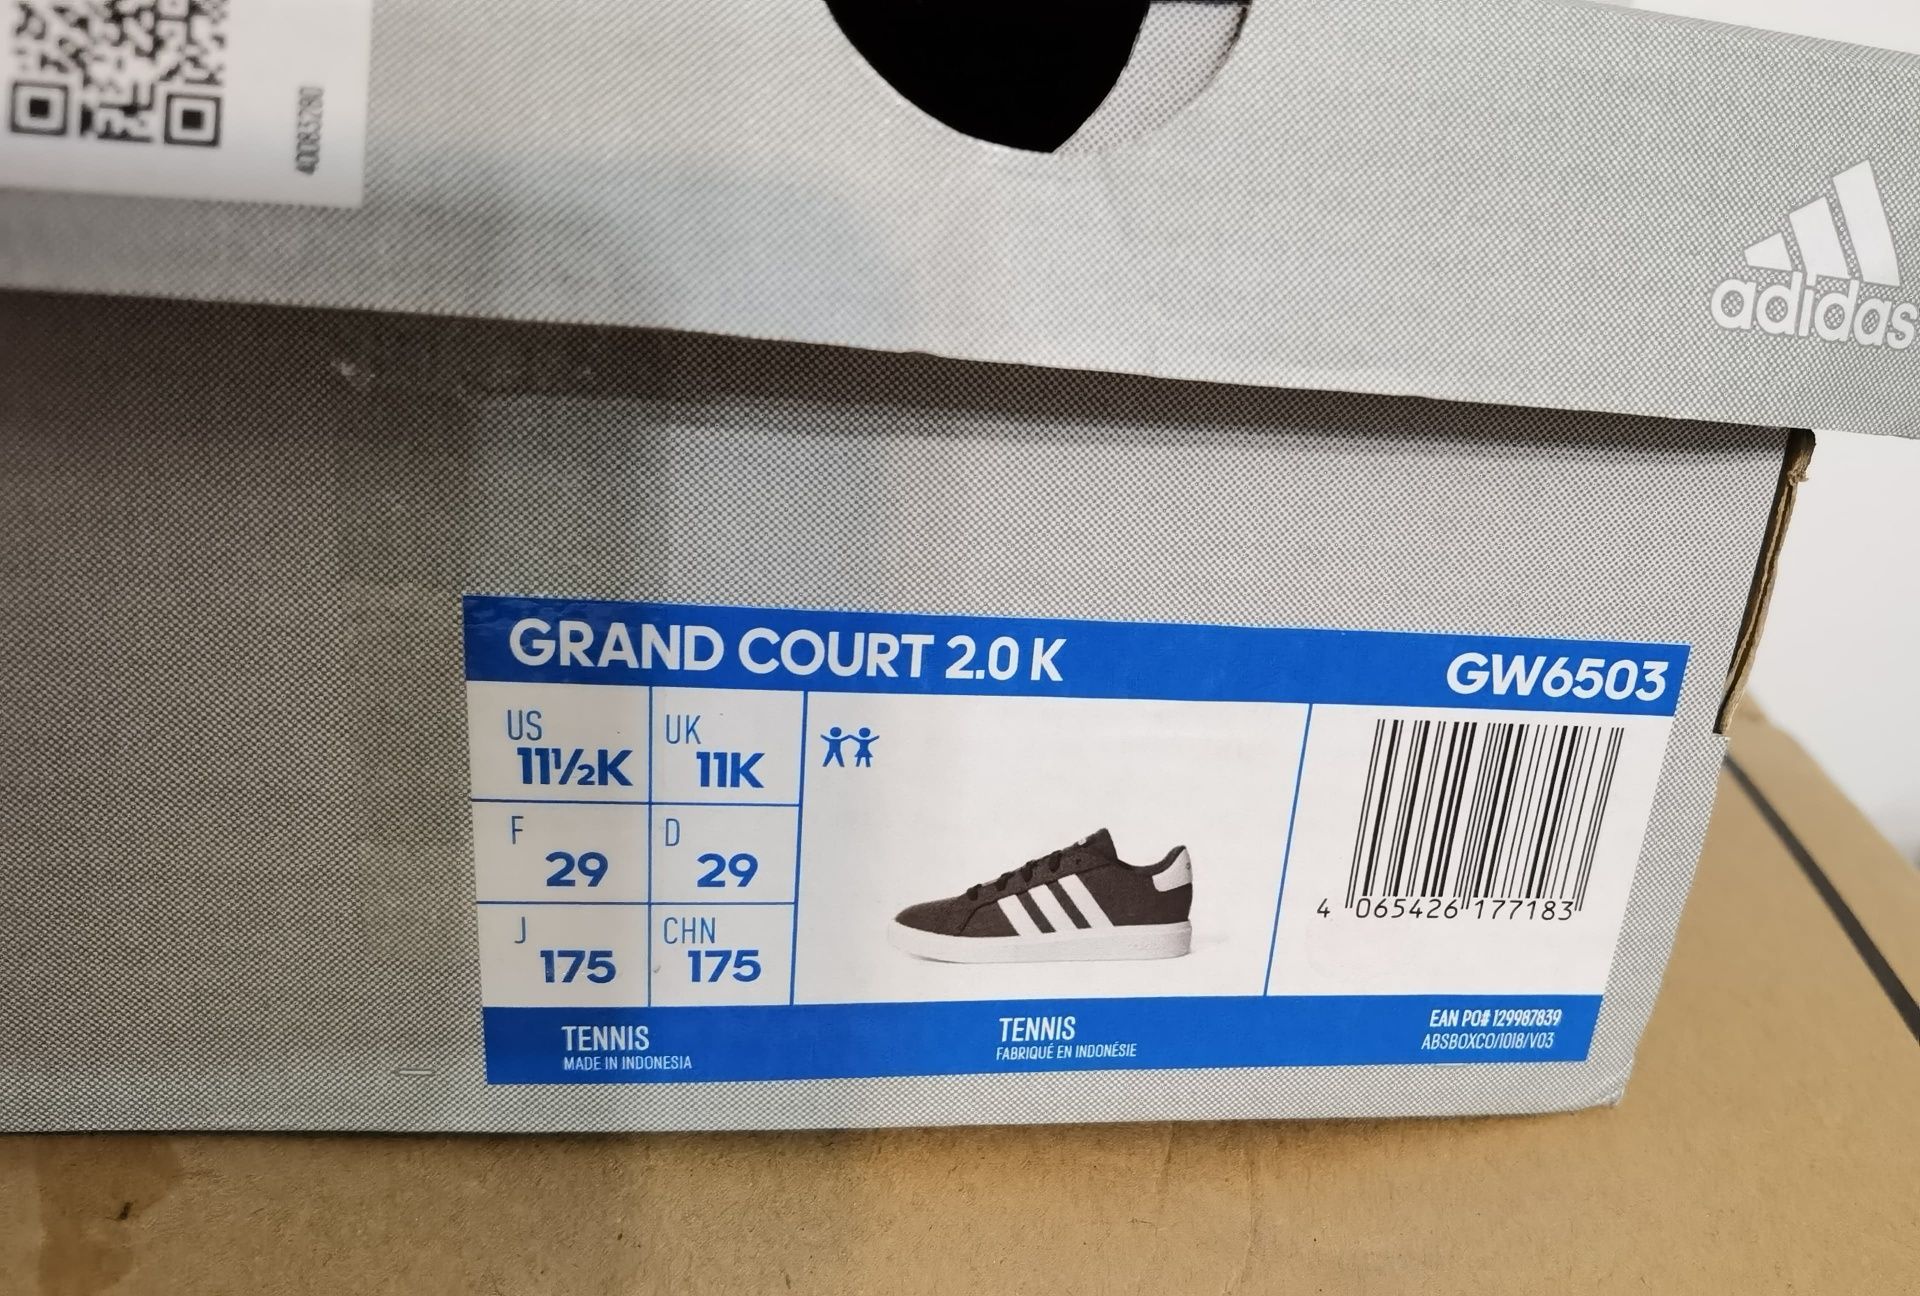 Adidas grand court 2.0k